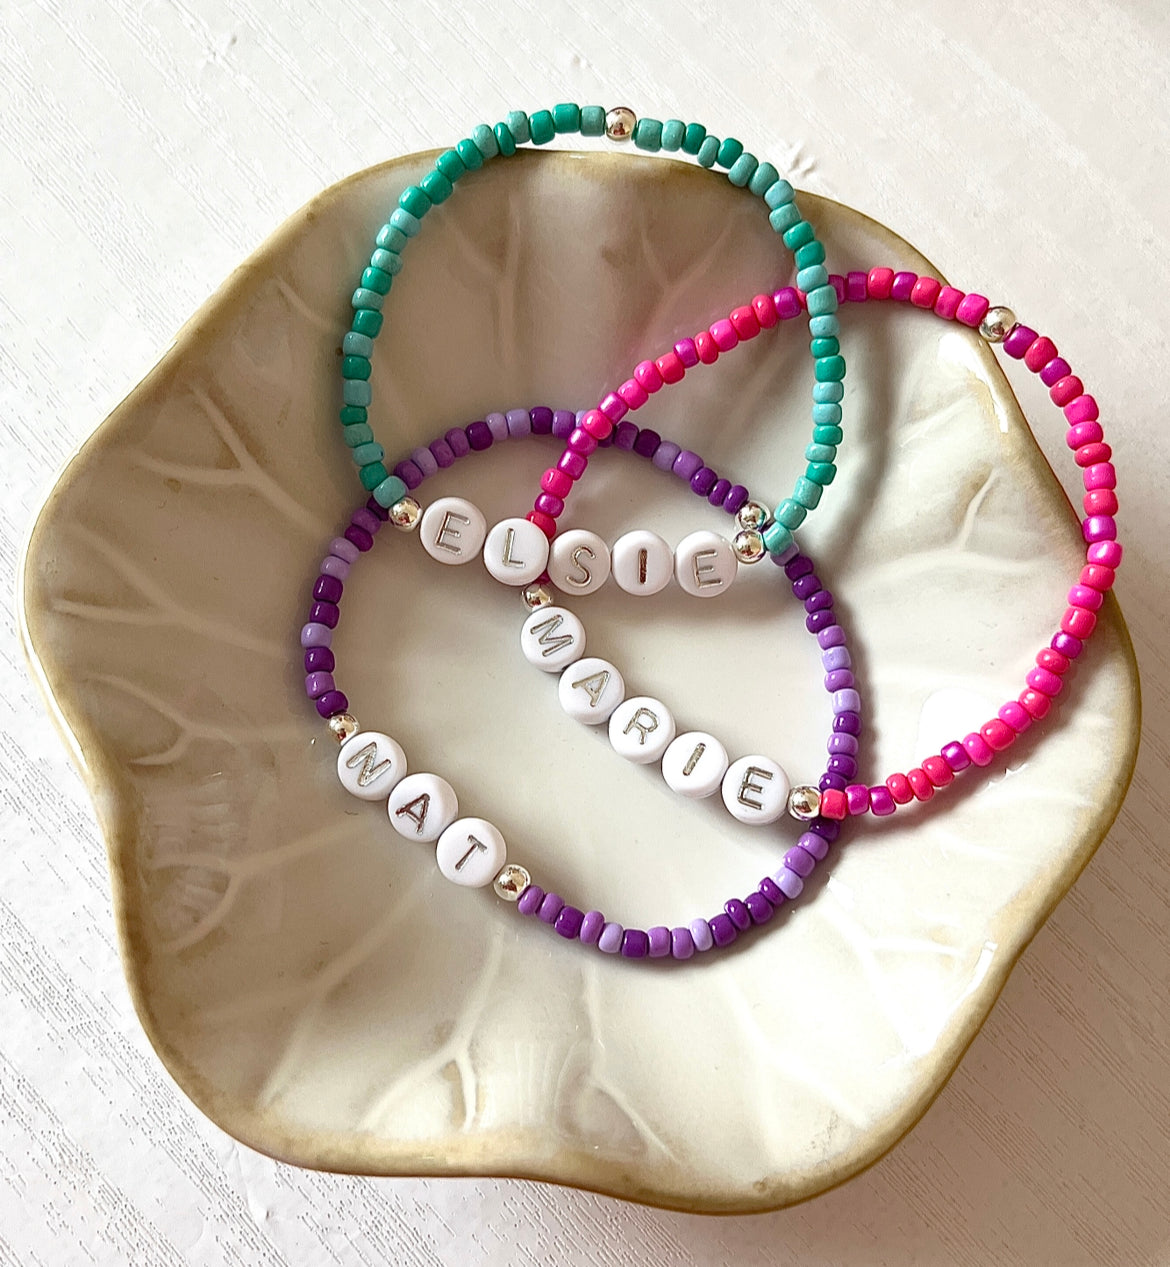 Colour spectrum beaded friendship bracelet